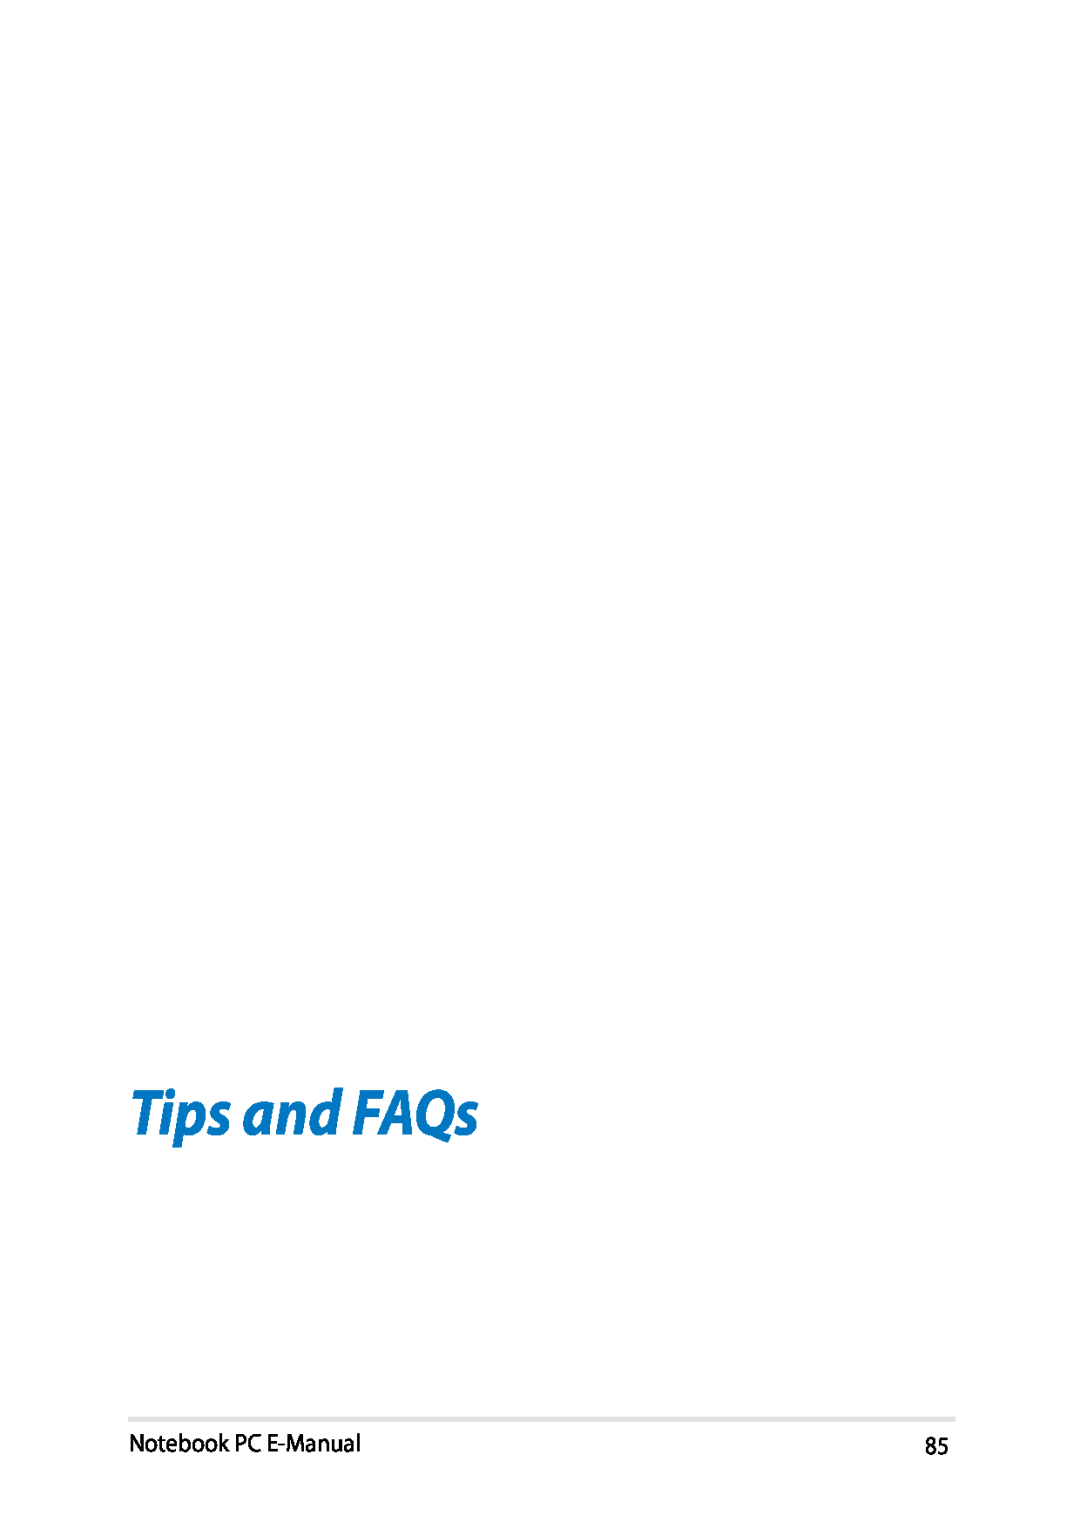 Asus E8438 manual Tips and FAQs, Notebook PC E-Manual 